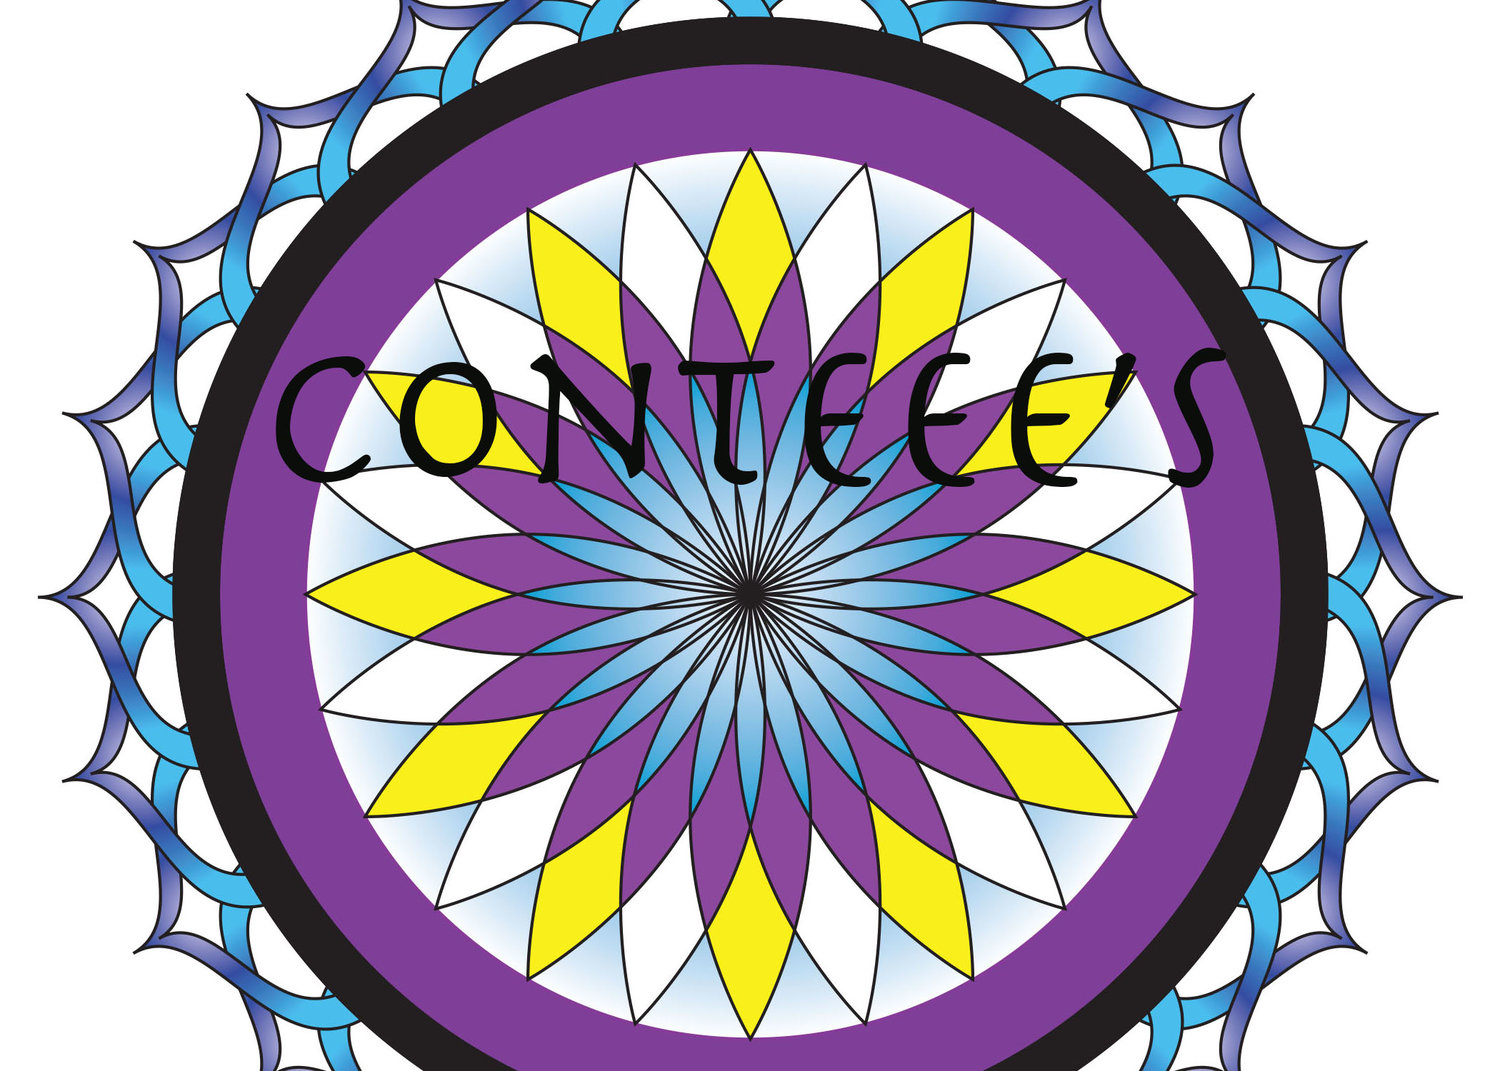 Conteee's